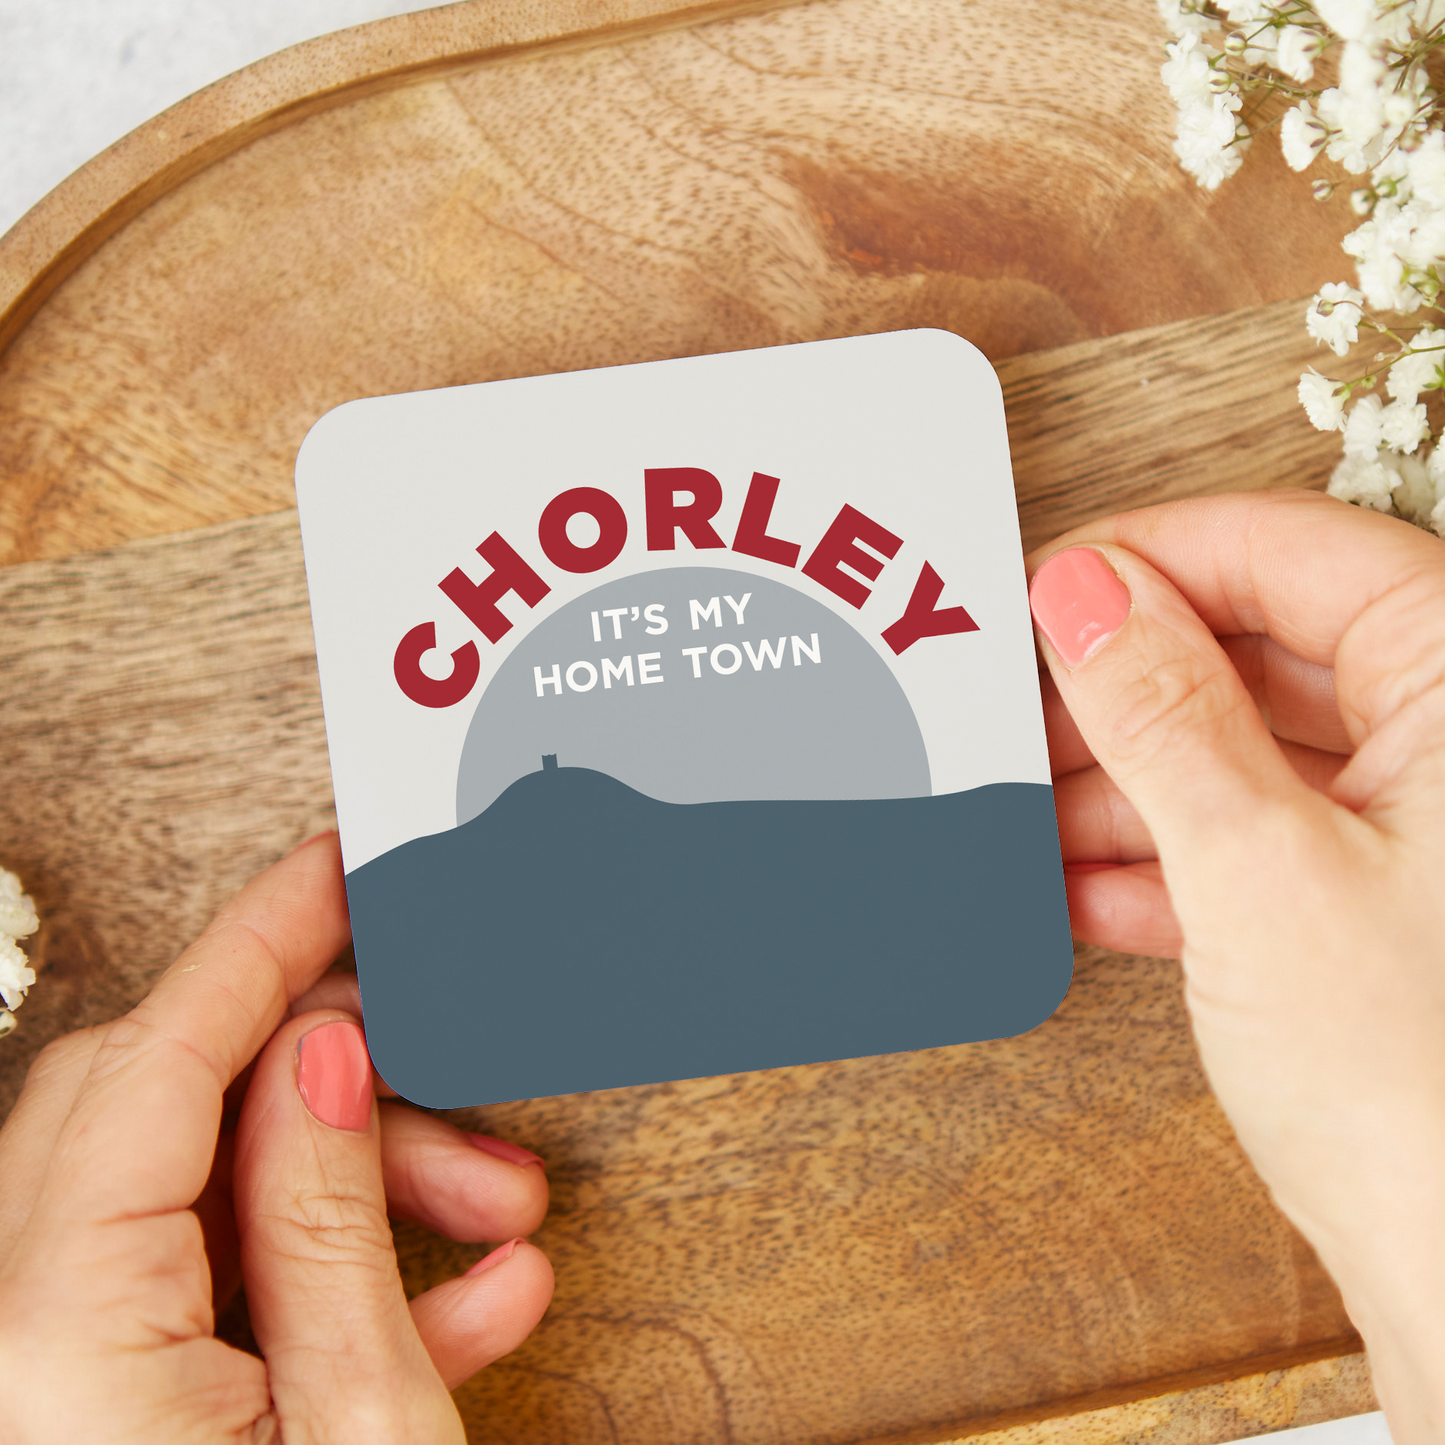 Chorley Coasters